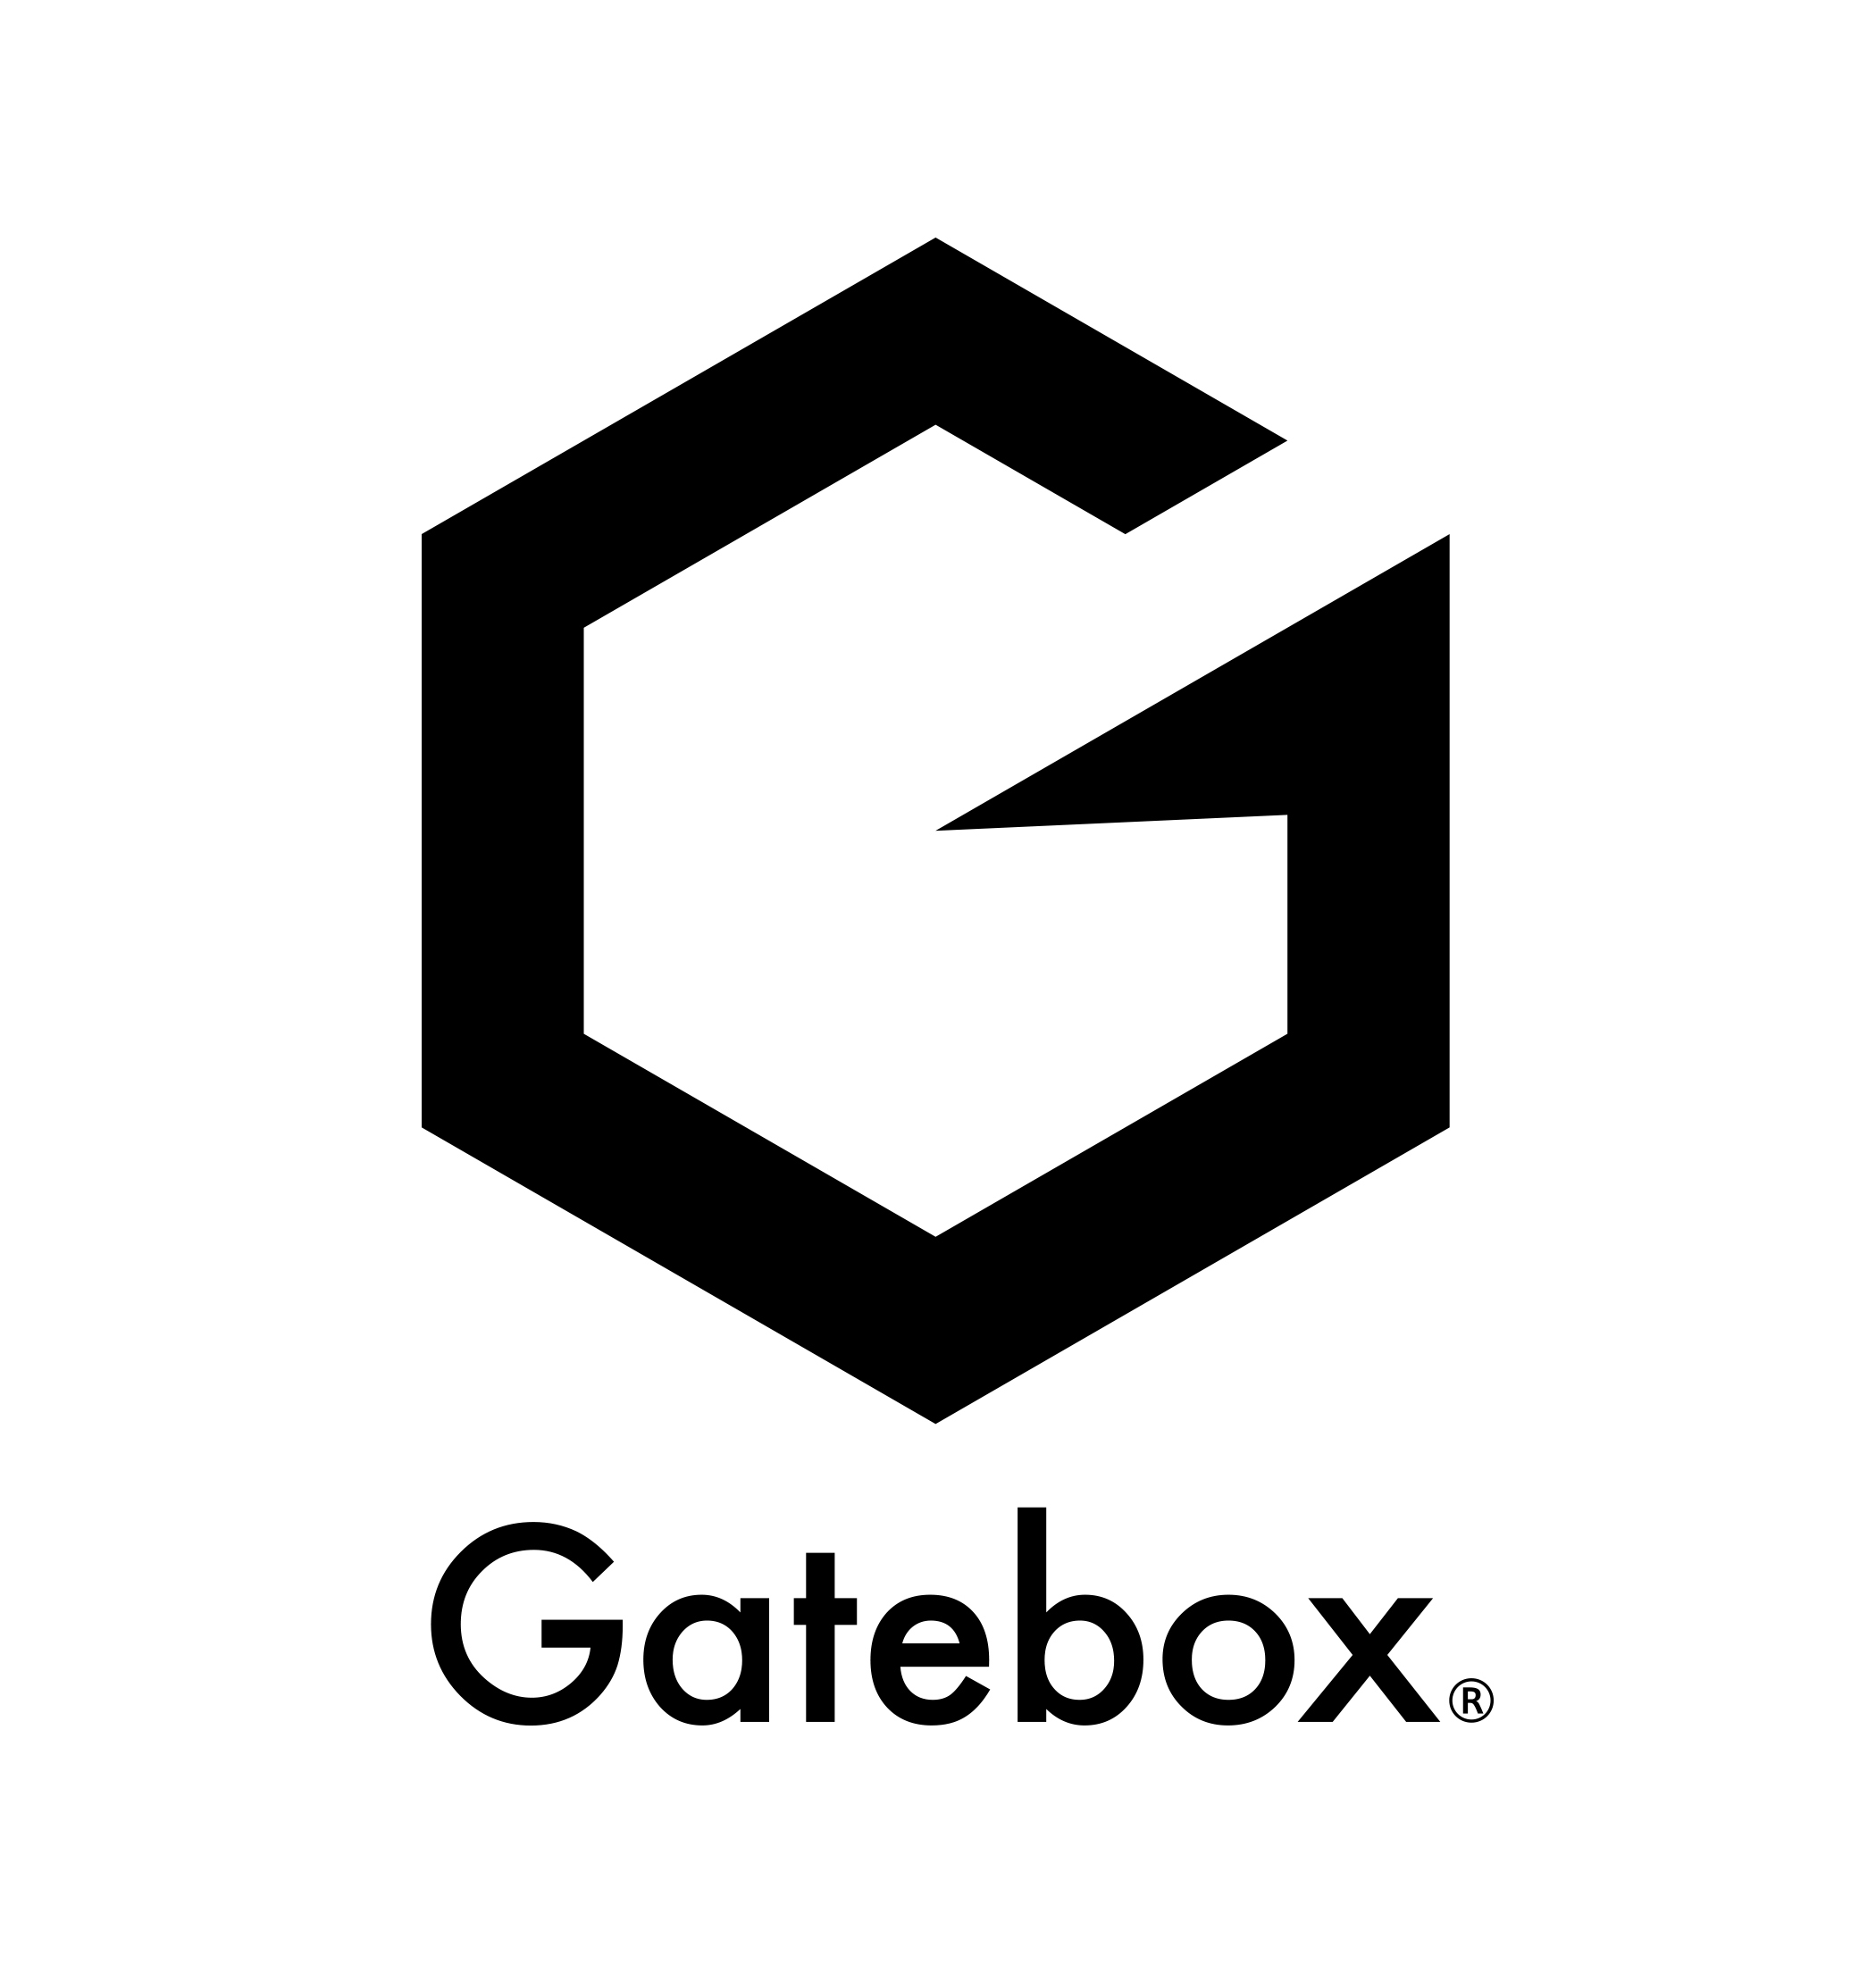 Gatebox株式会社